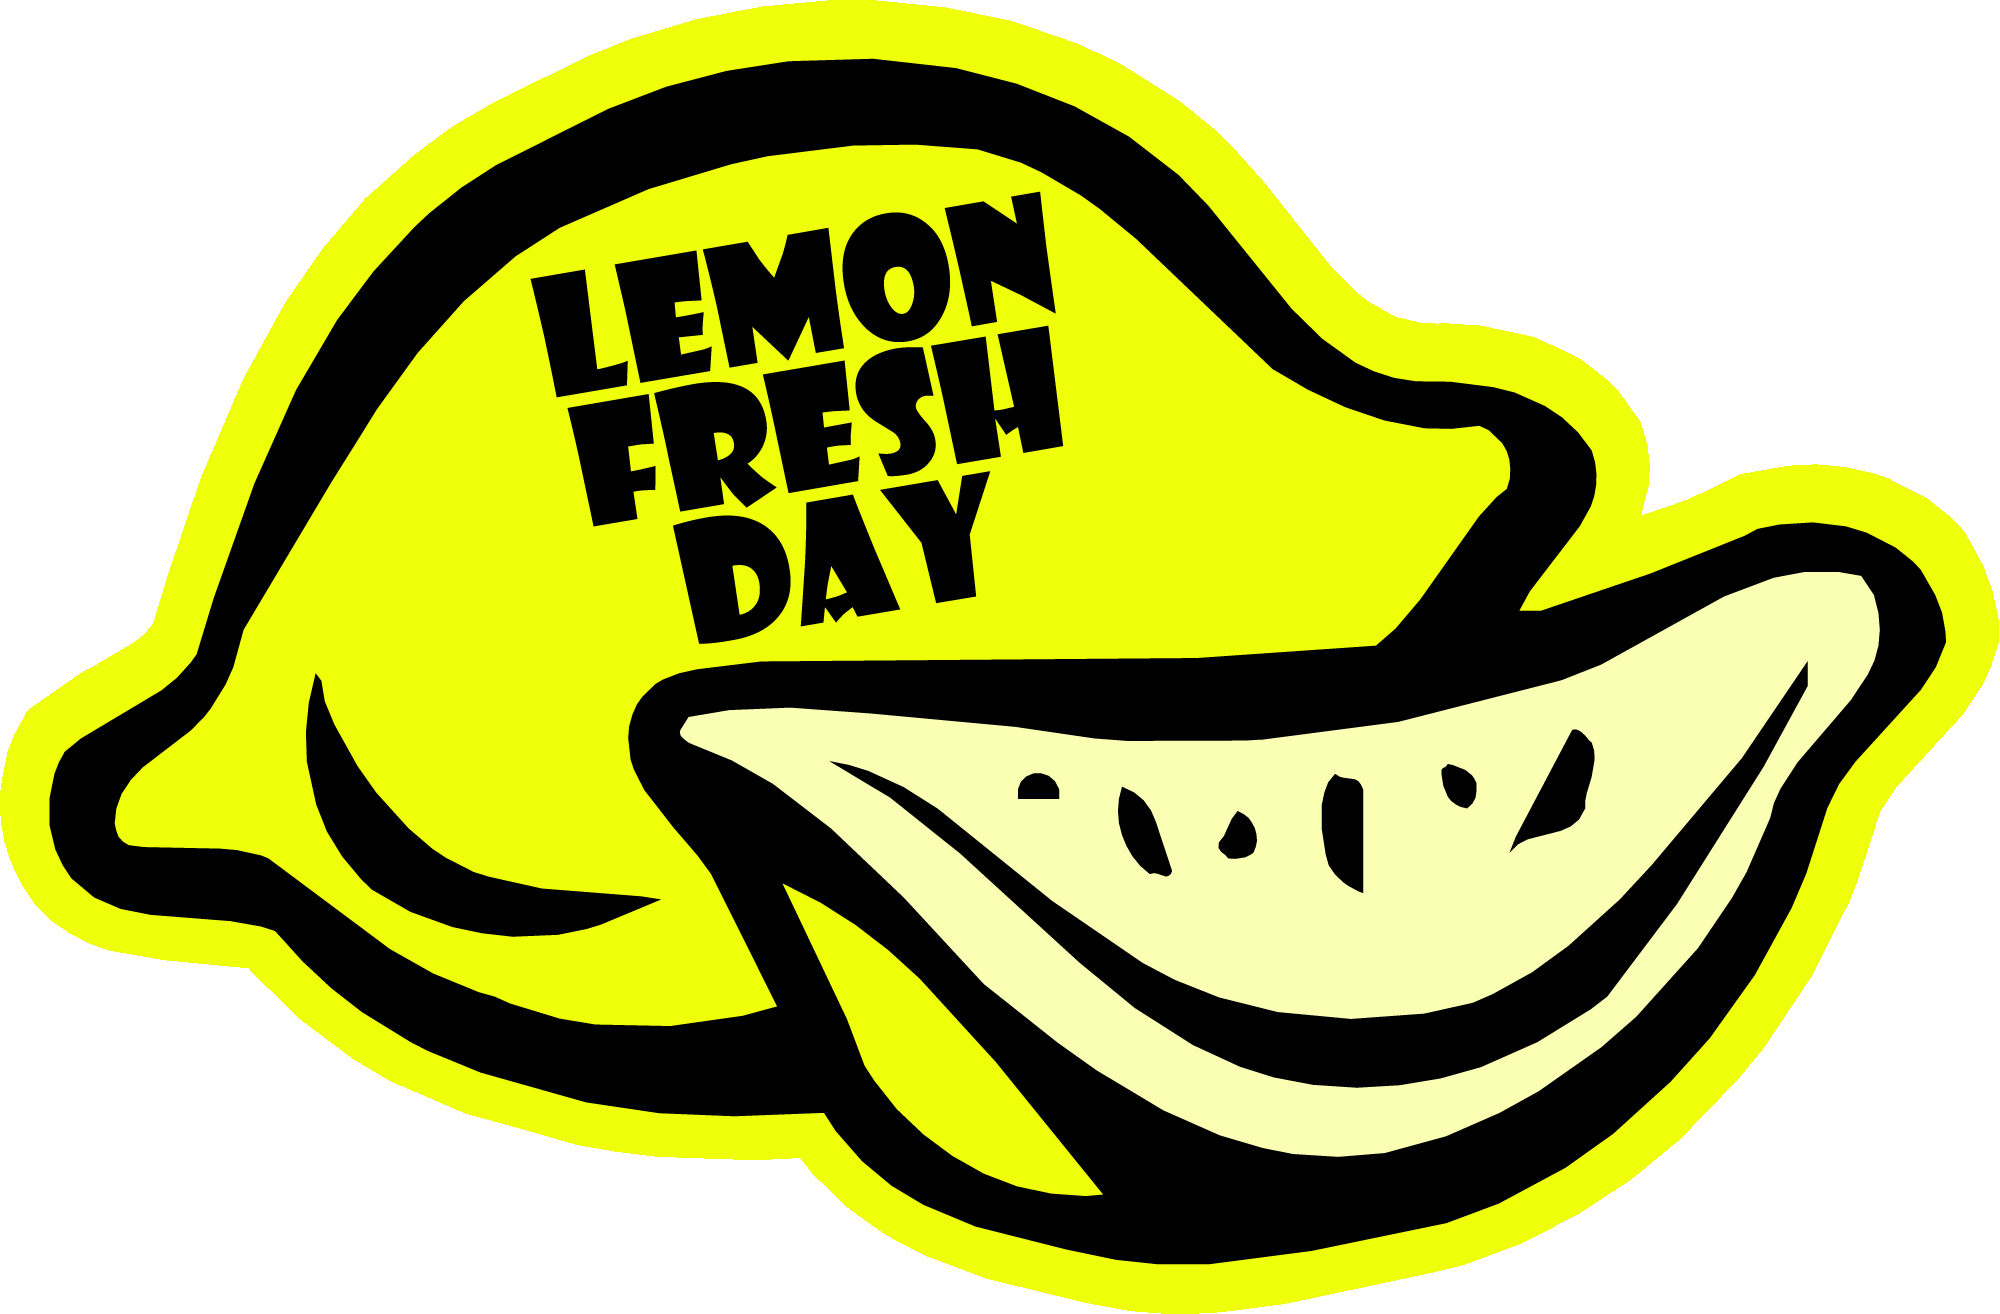 Lemon Fresh Day